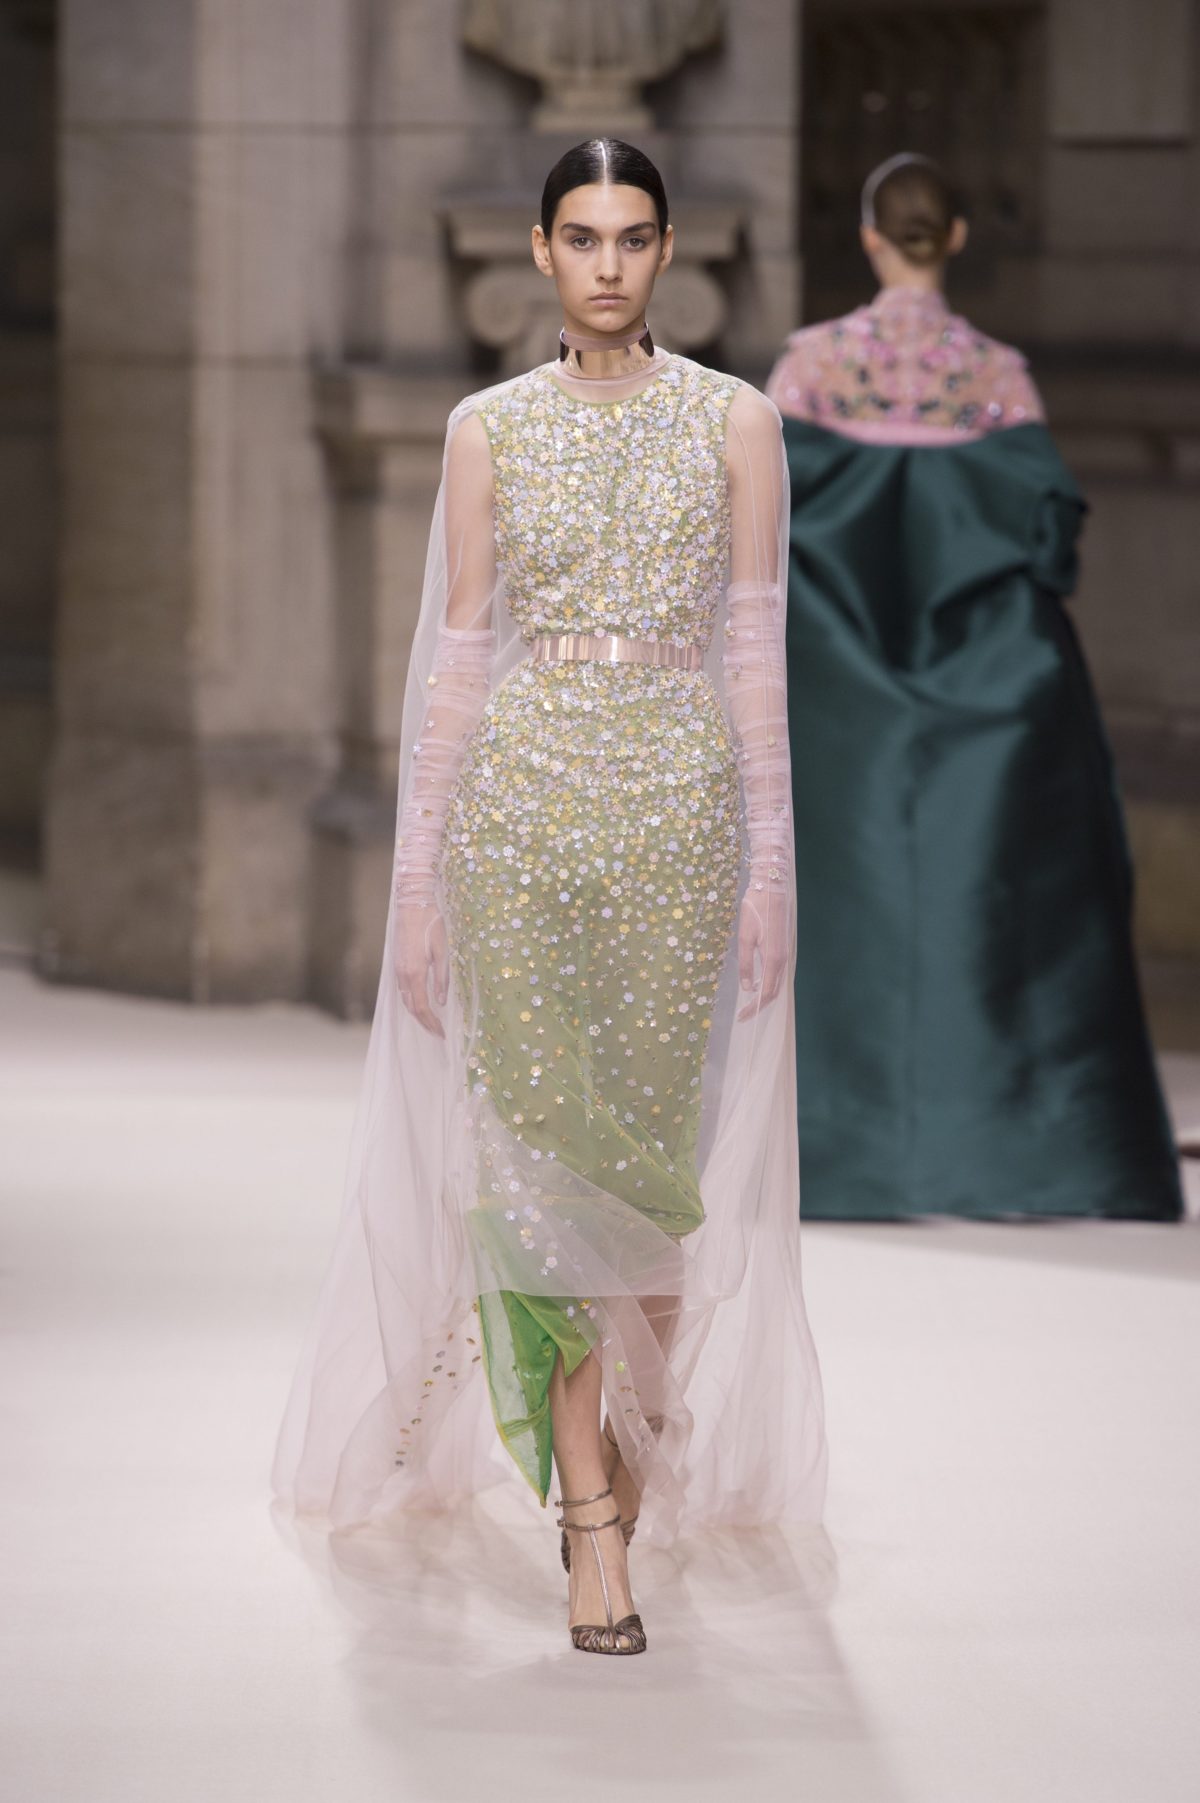 Galia Lahav's Paris Haute Couture Runway Collection is Outstanding ...